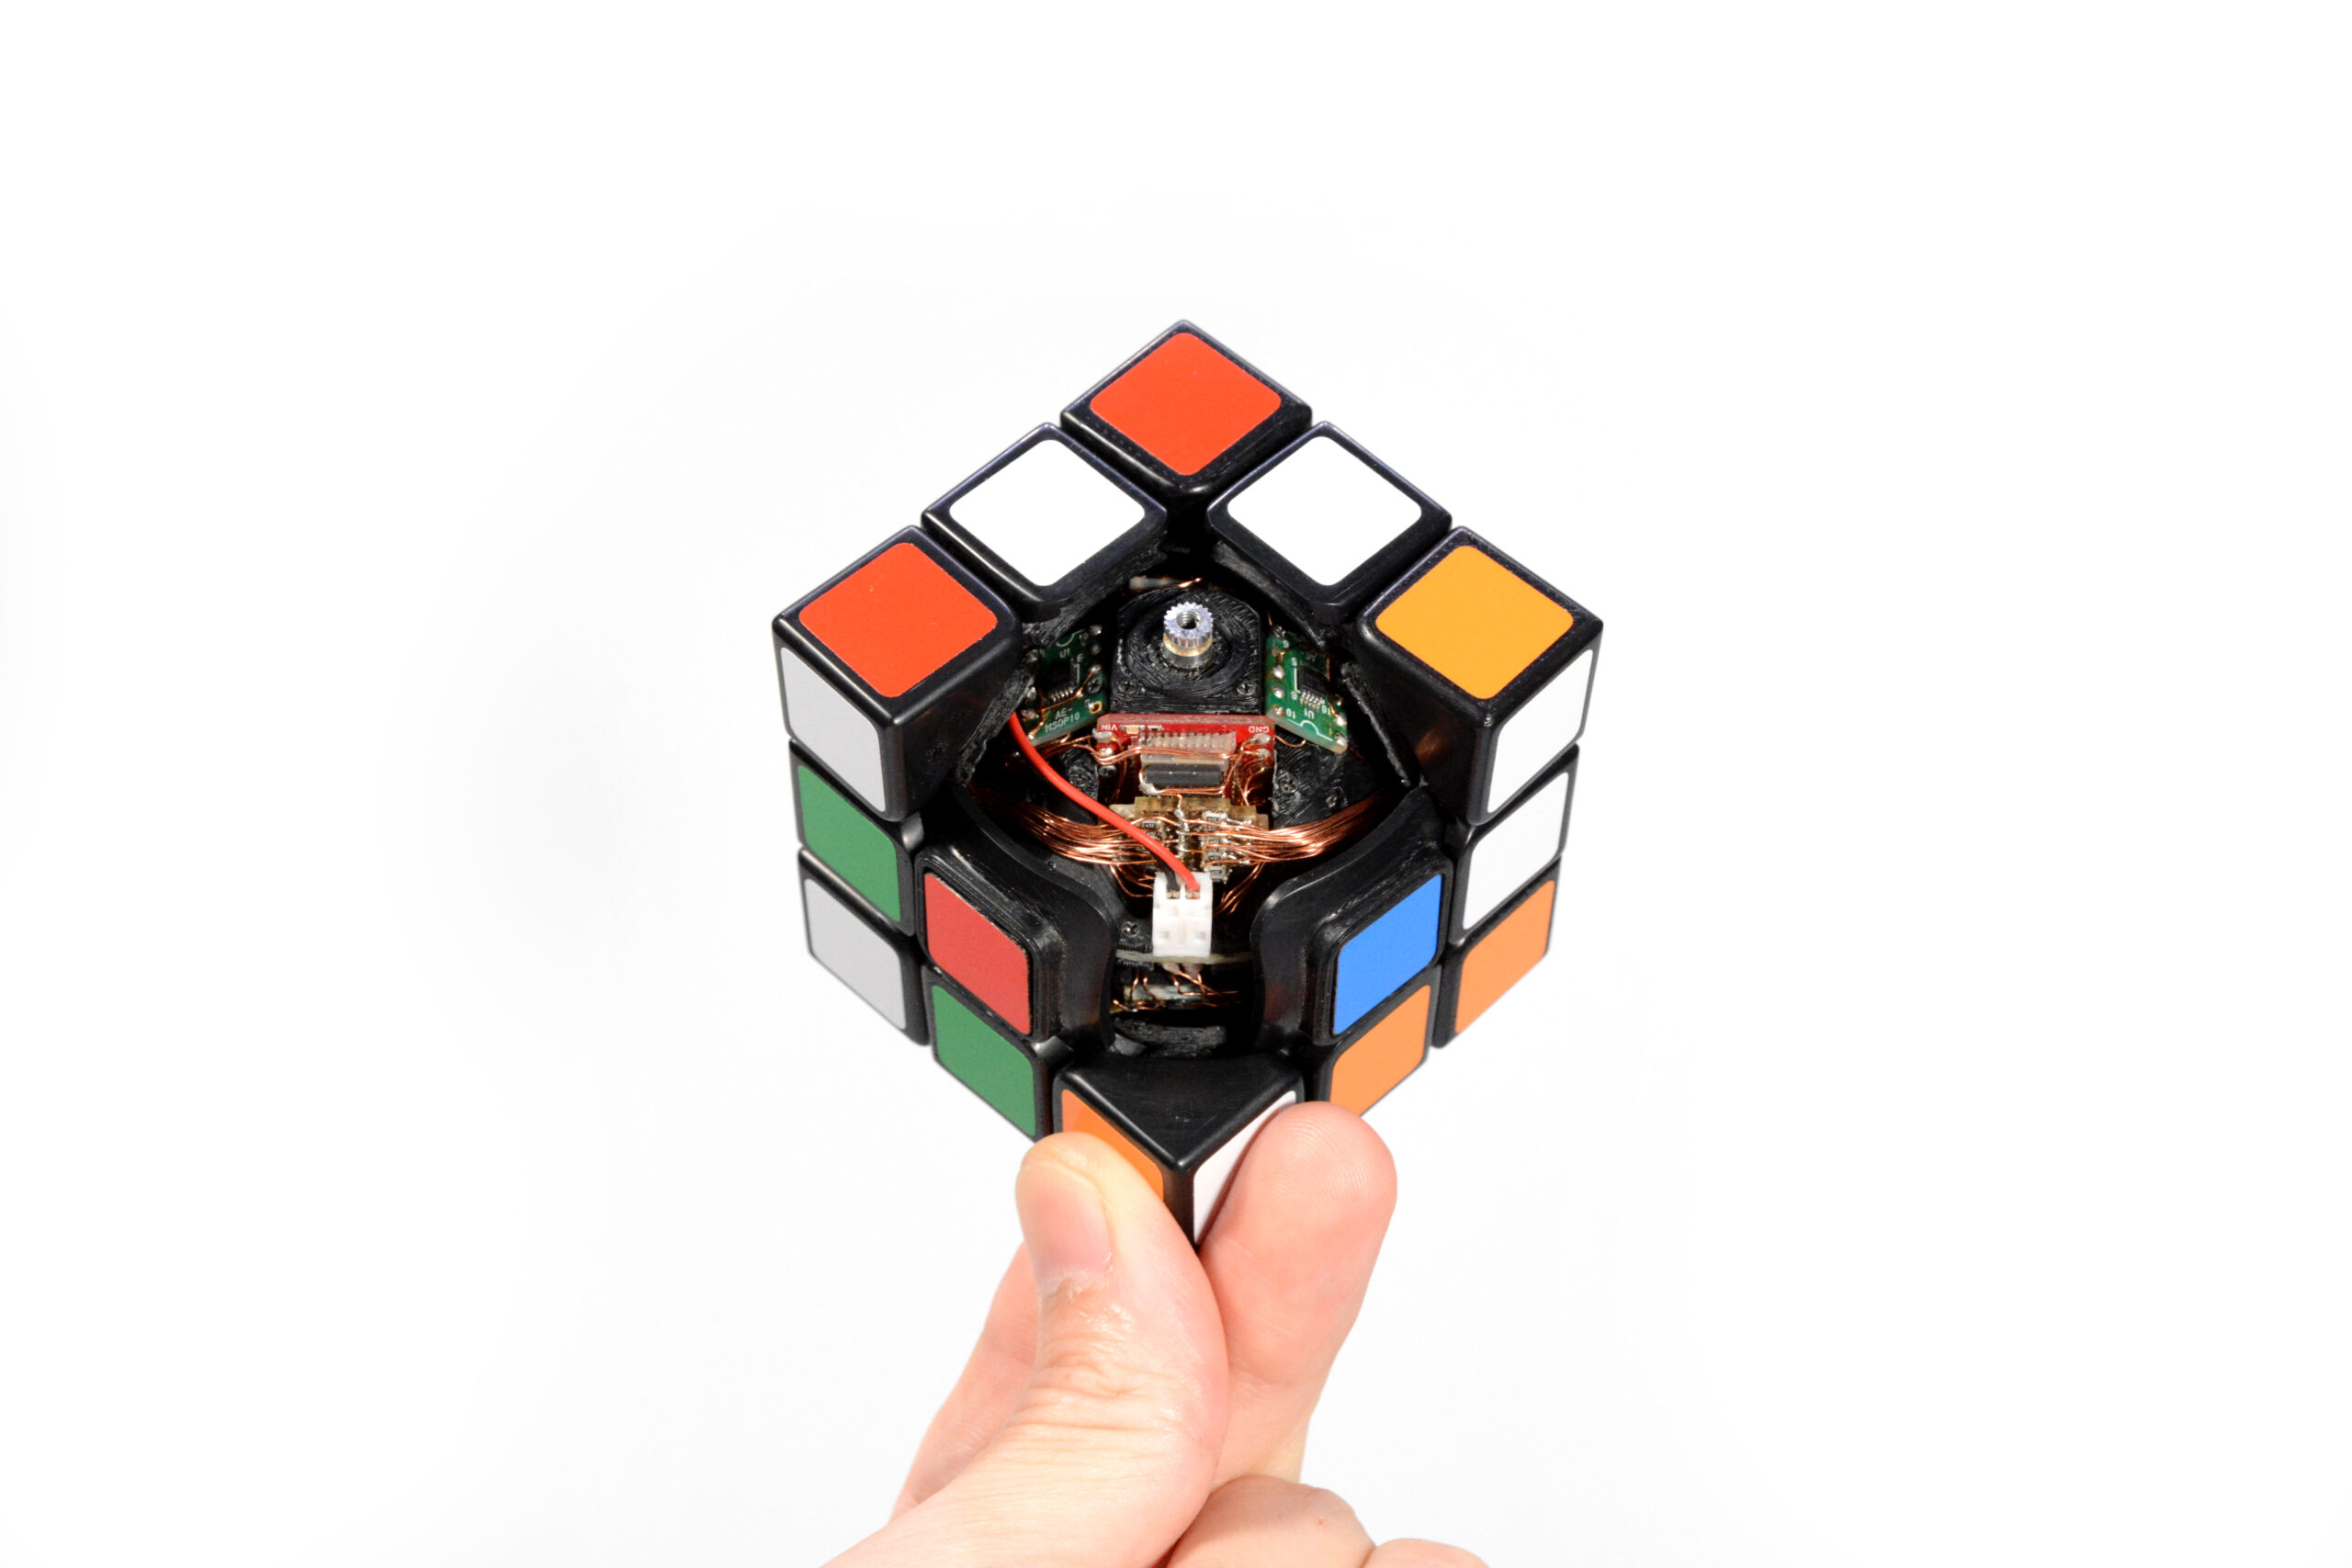 Rubik's cube Solution